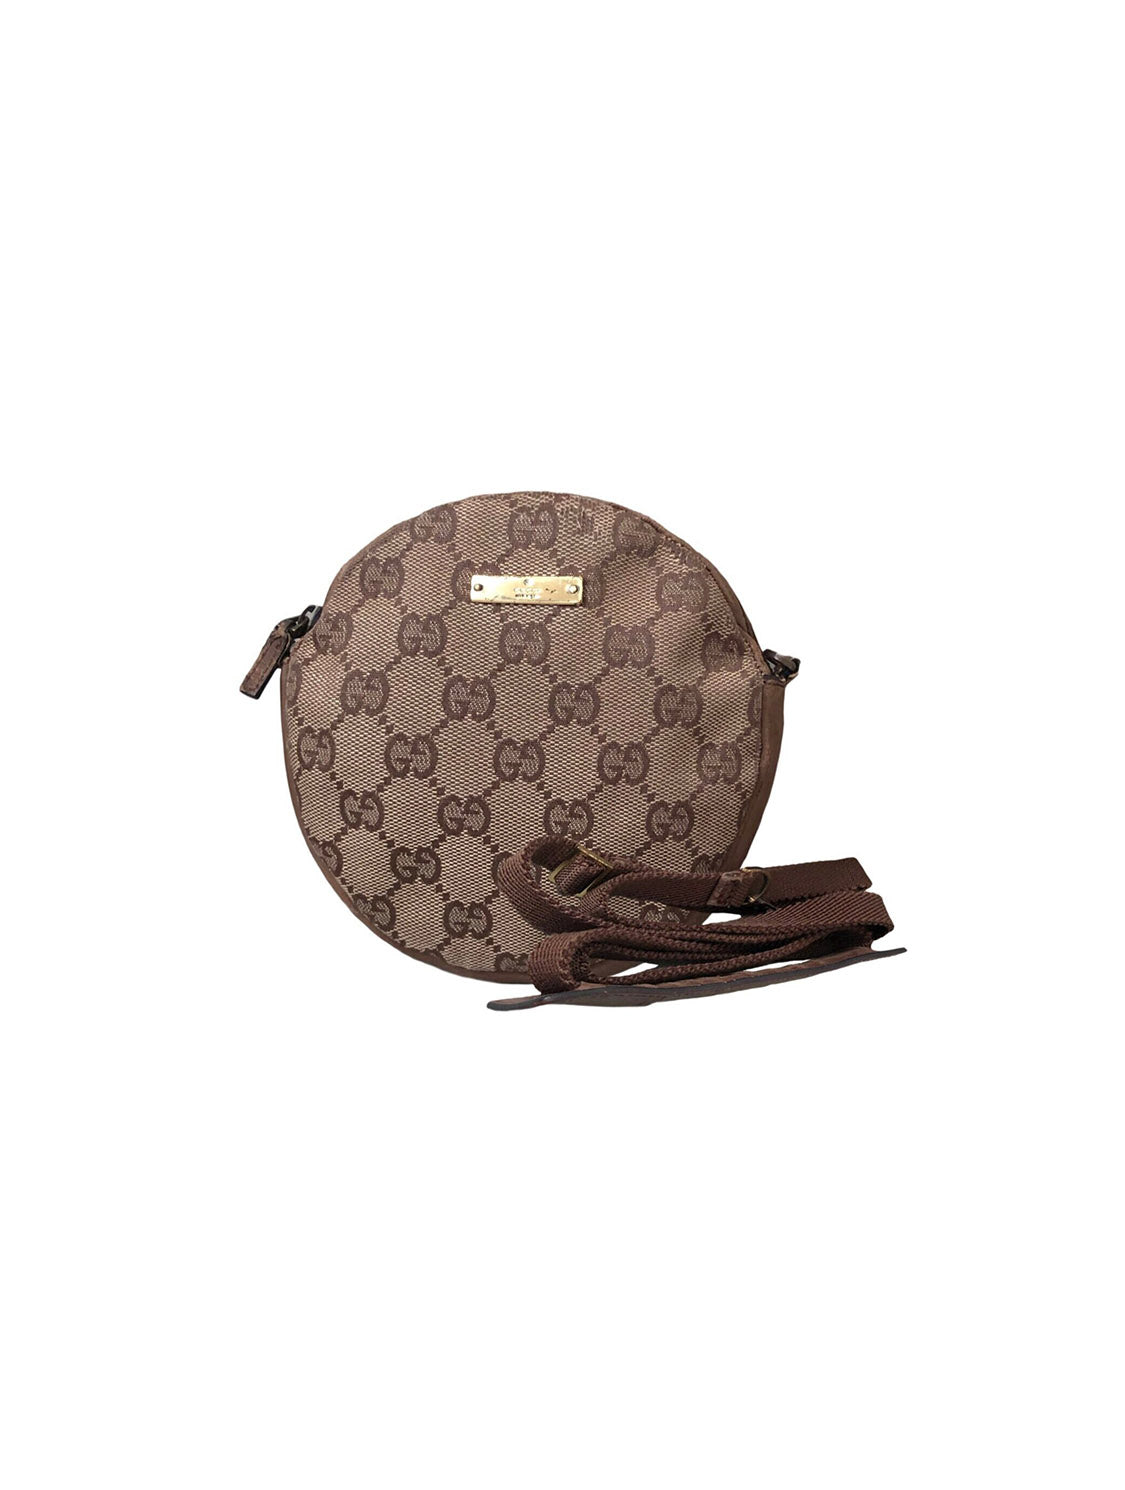 Louis Vuitton 2000s GM Rounded Monogram Handbag · INTO